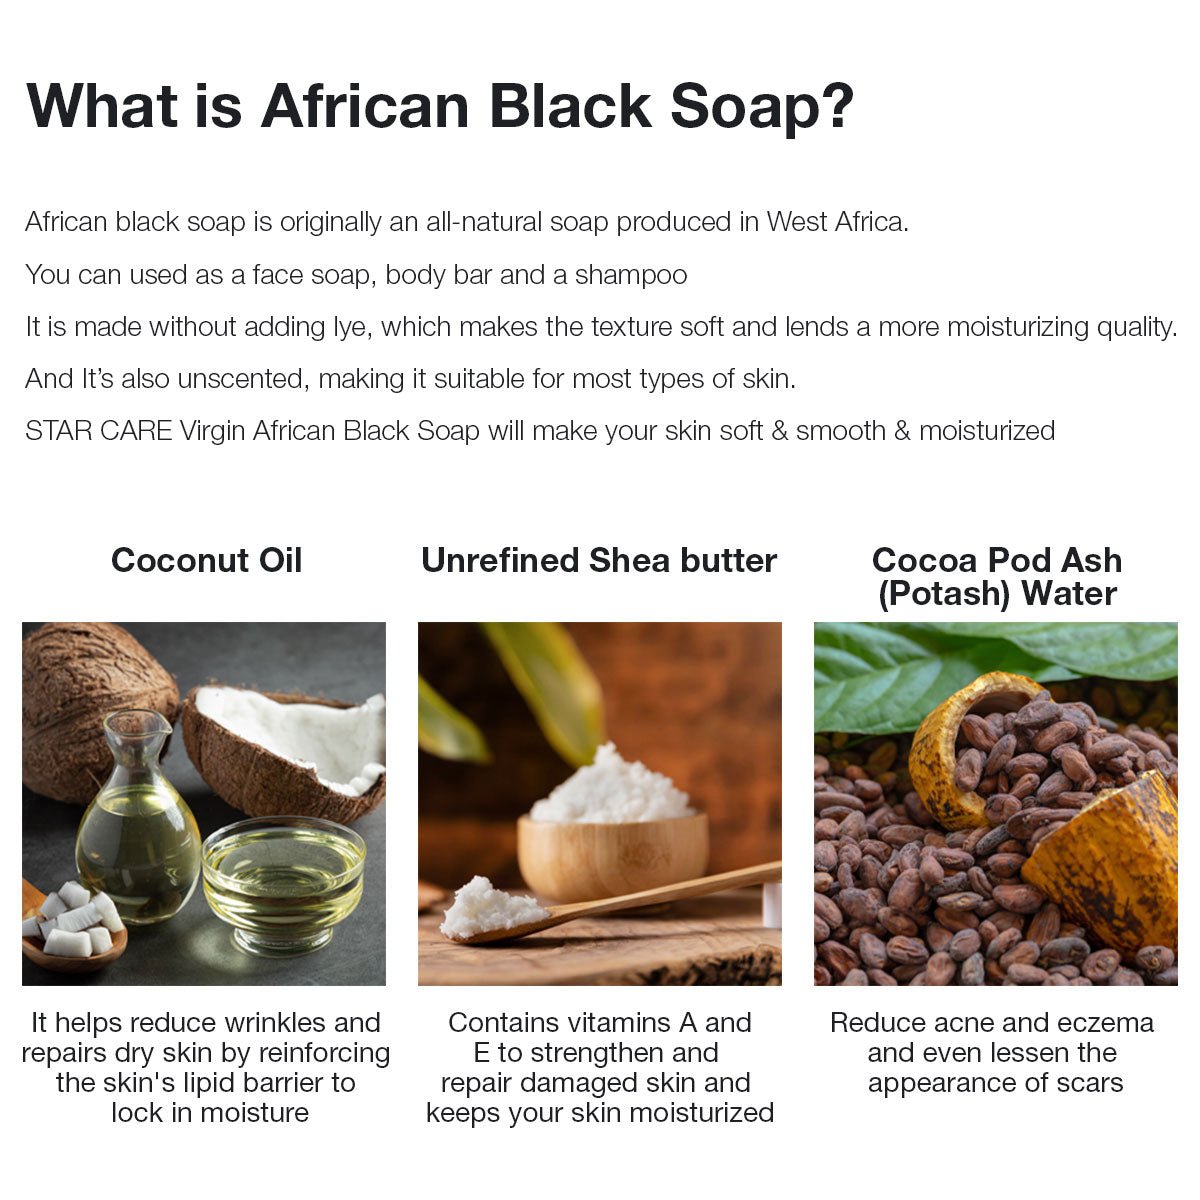 Star Care 100% Virgin African Black Soap